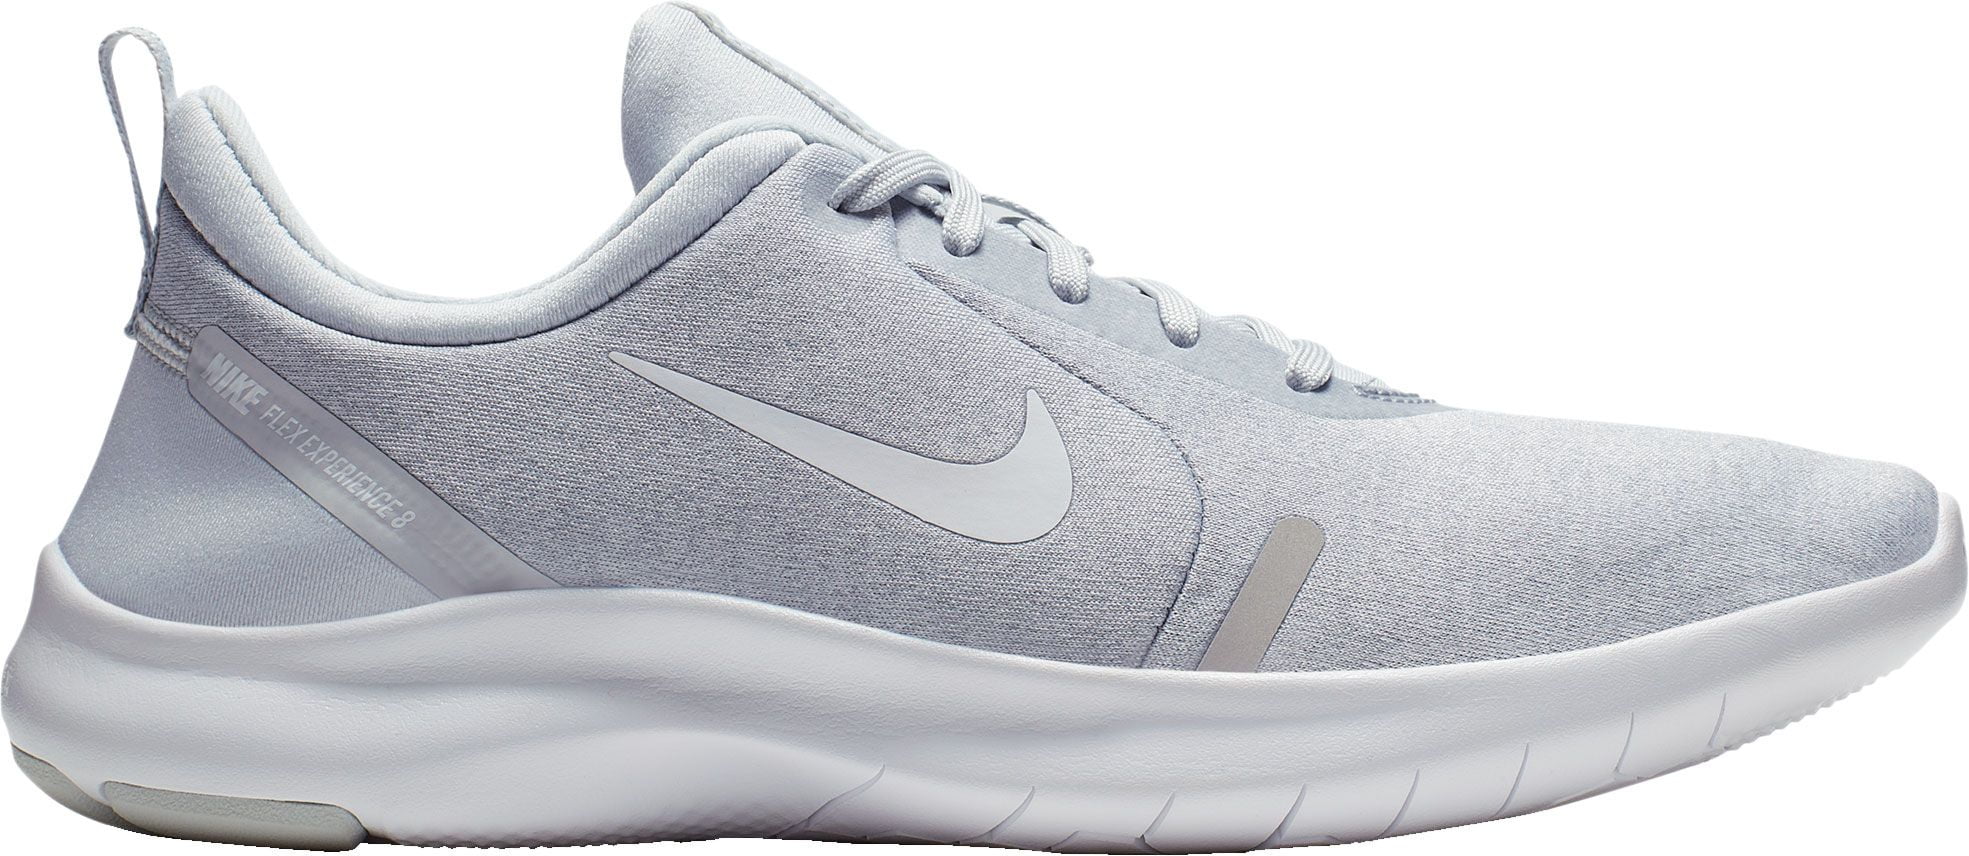 Nike - Nike Women's Flex Experience RN 8 Running Shoes - Walmart.com ...